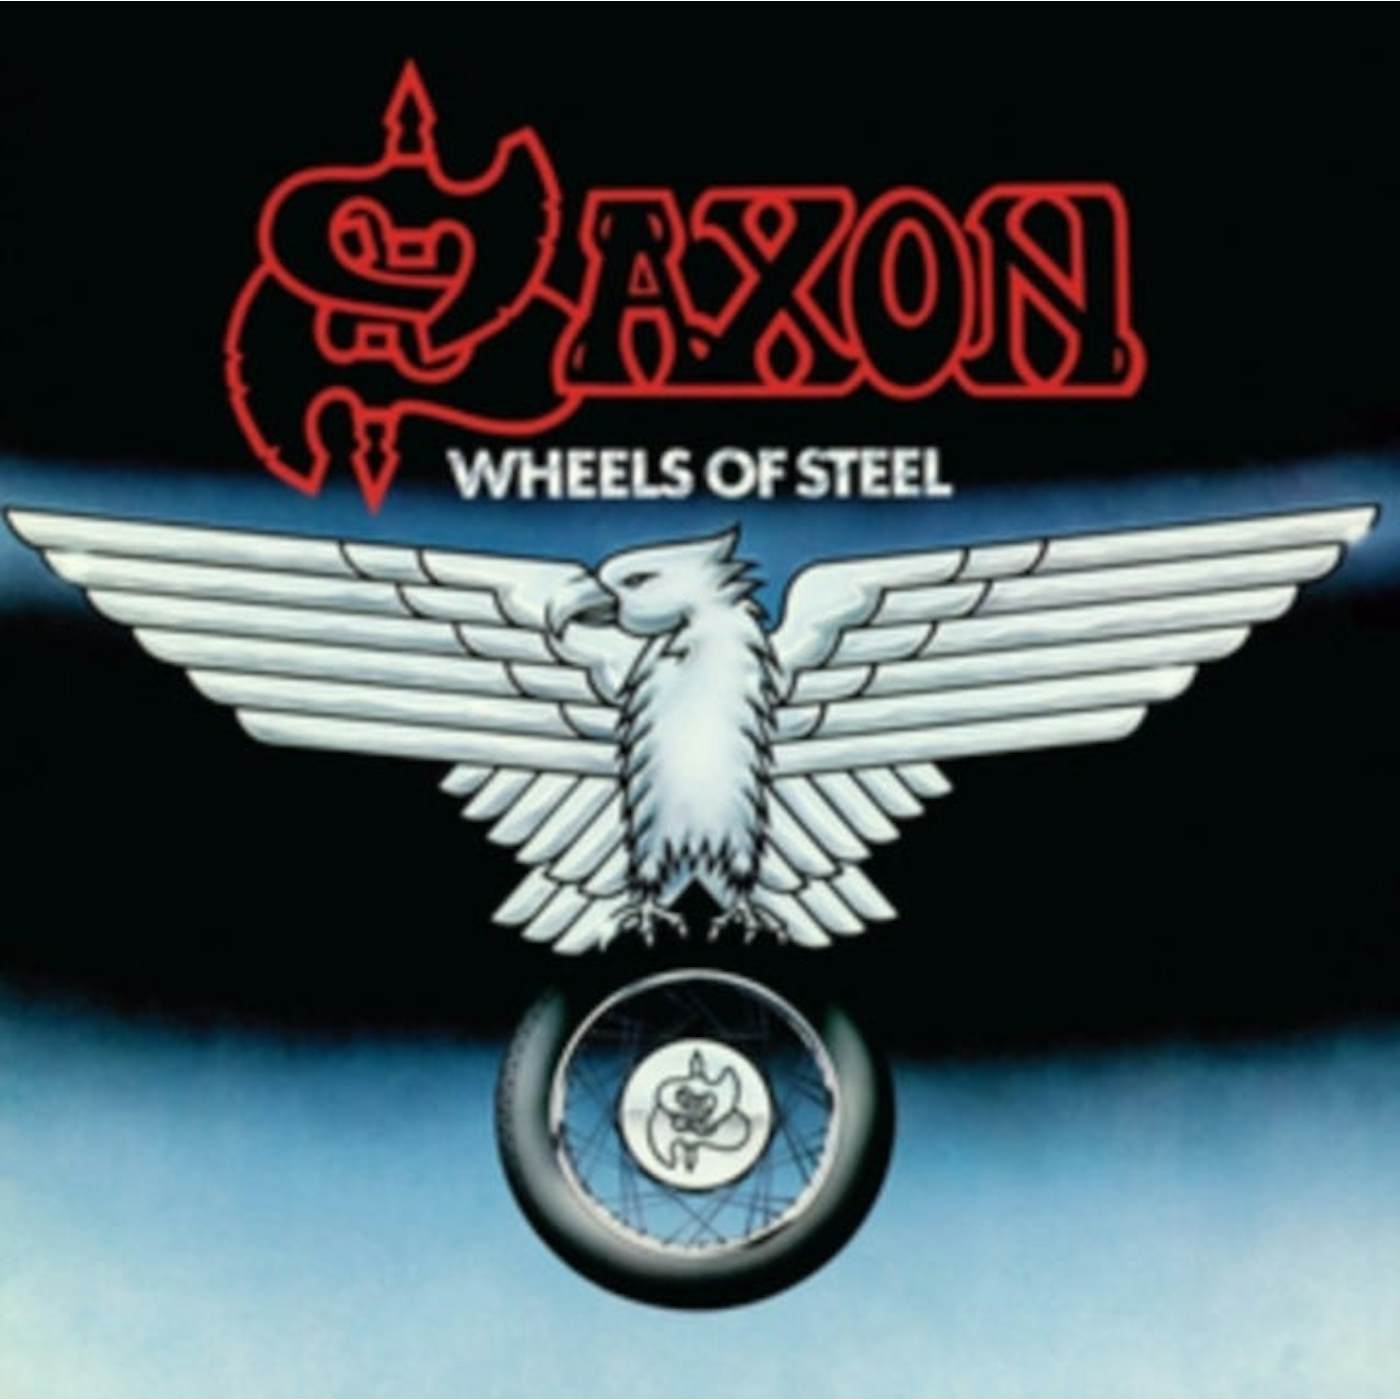 Saxon LP Vinyl Record - Wheels Of Steel